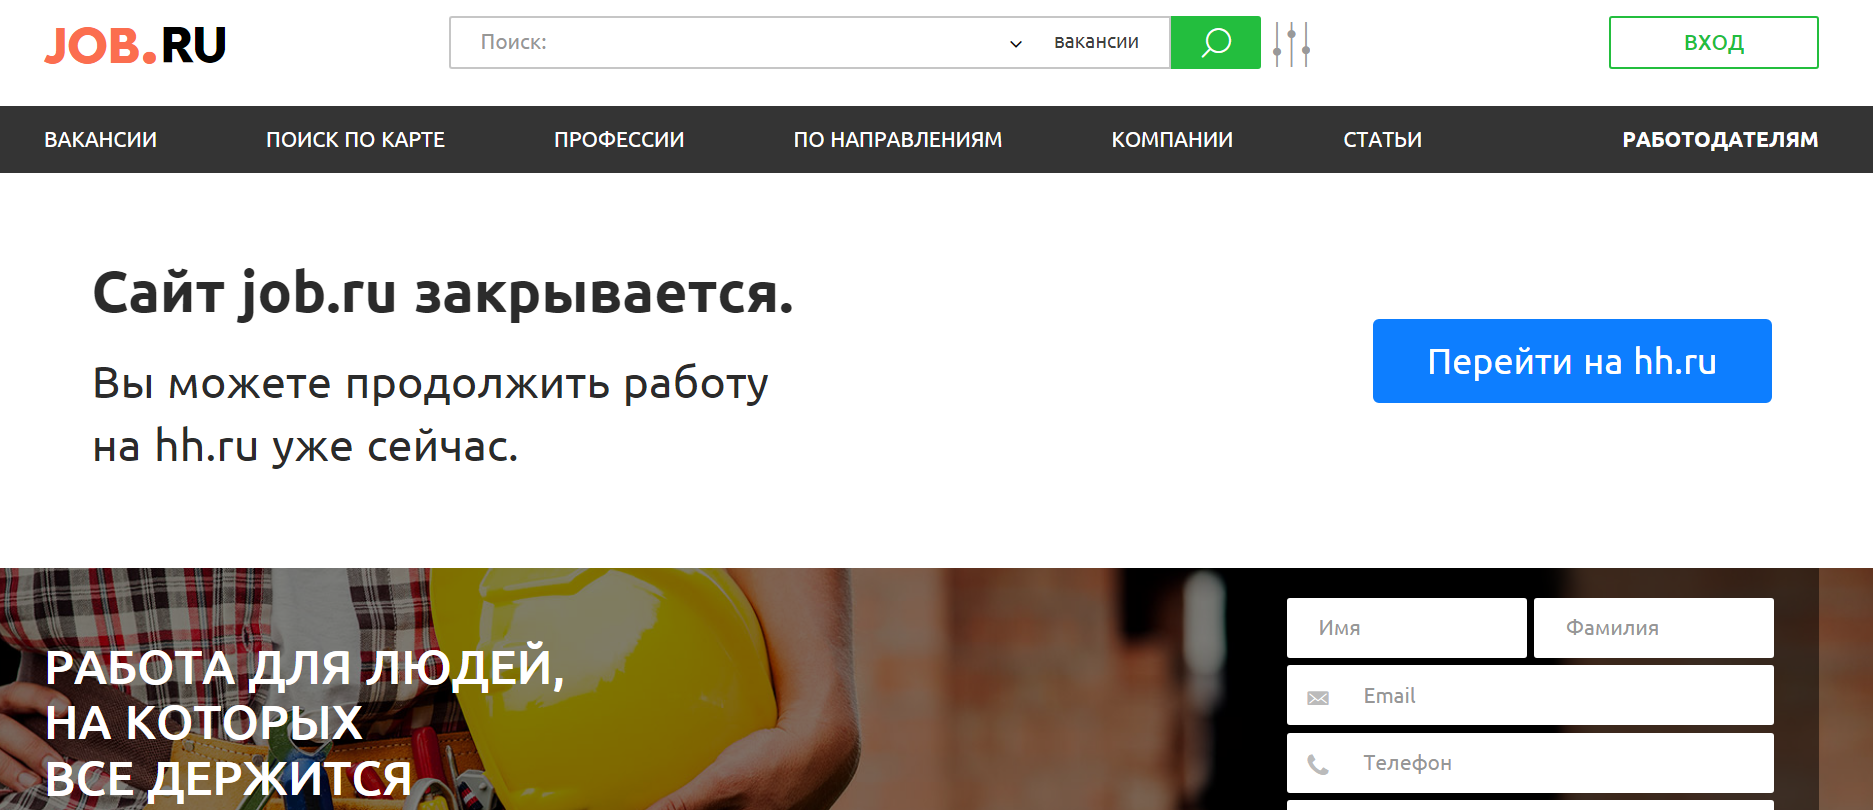  HeadHunter покупает job.ru